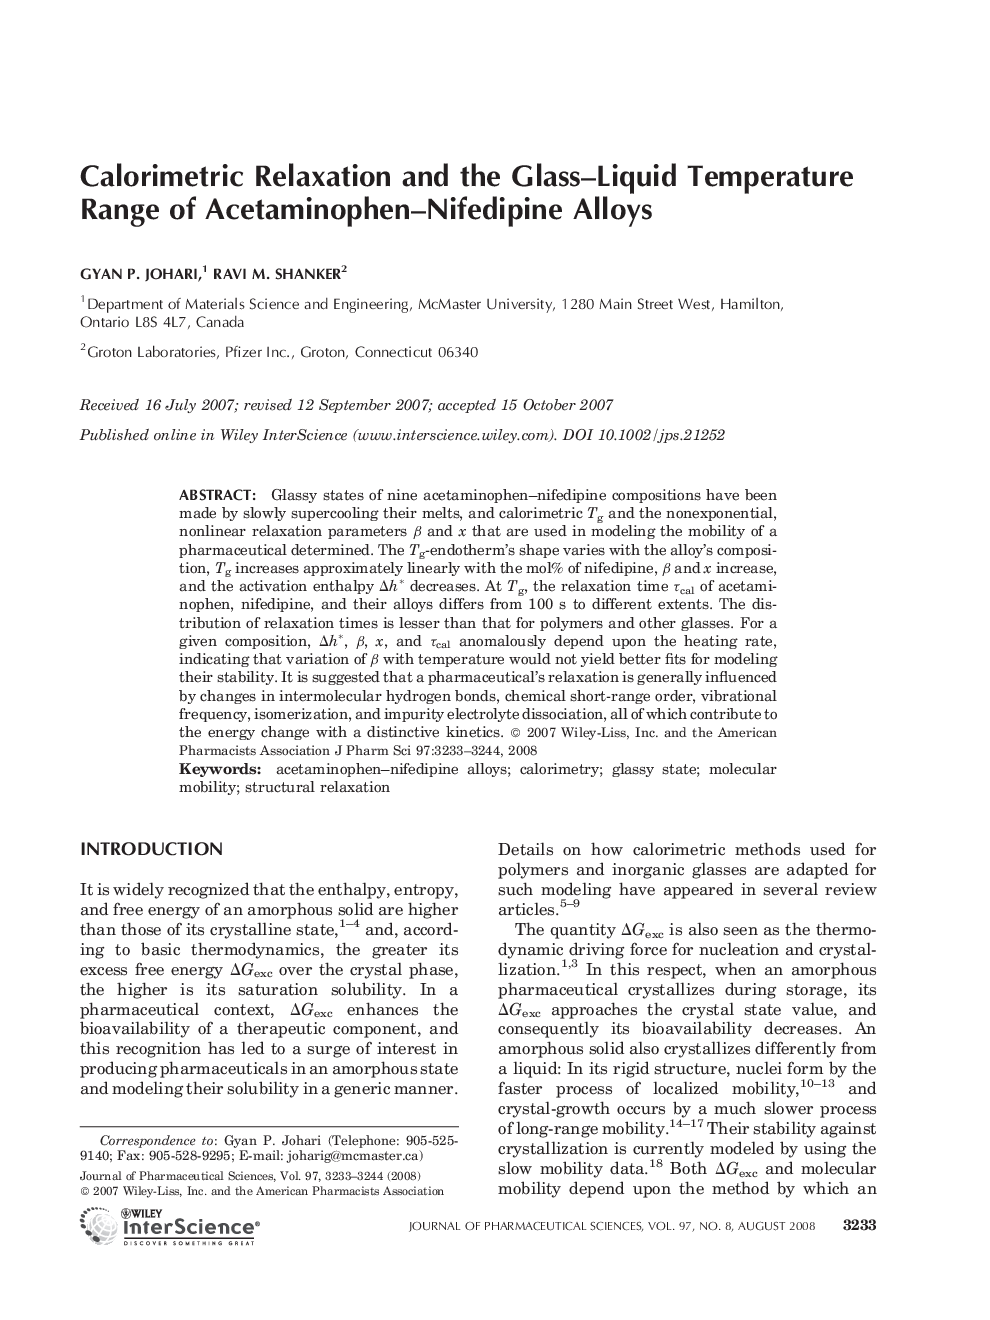 Calorimetric Relaxation and the Glass-Liquid Temperature Range of Acetaminophen-Nifedipine Alloys